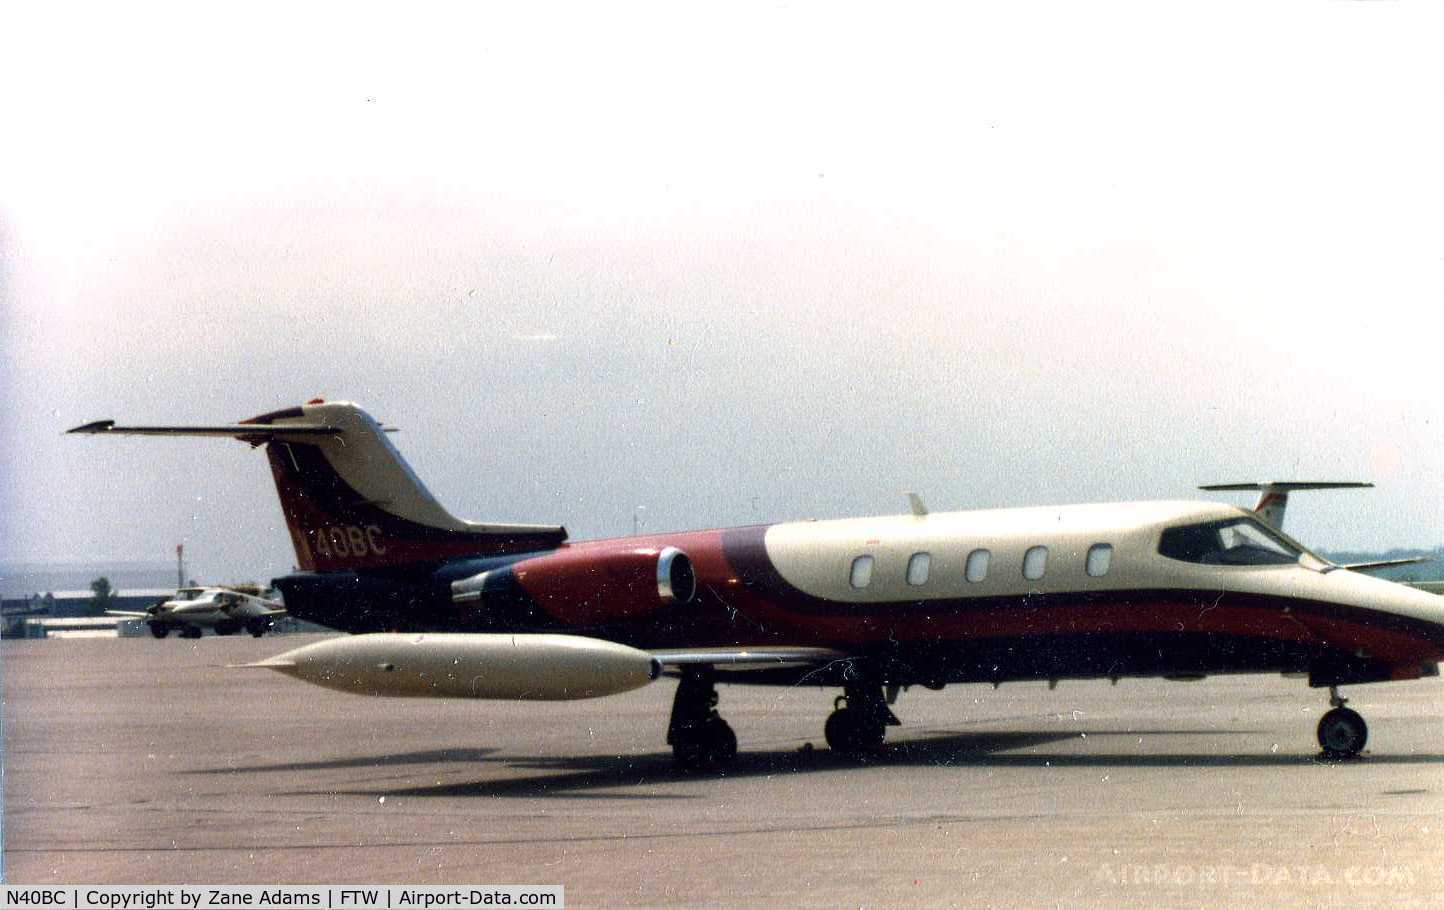 N40BC, 1973 Gates Learjet 25B C/N 128, Lear destroyed in accident July 6. 1979 - NTSB report - http://www.ntsb.gov/ntsb/brief.asp?ev_id=34477&key=0